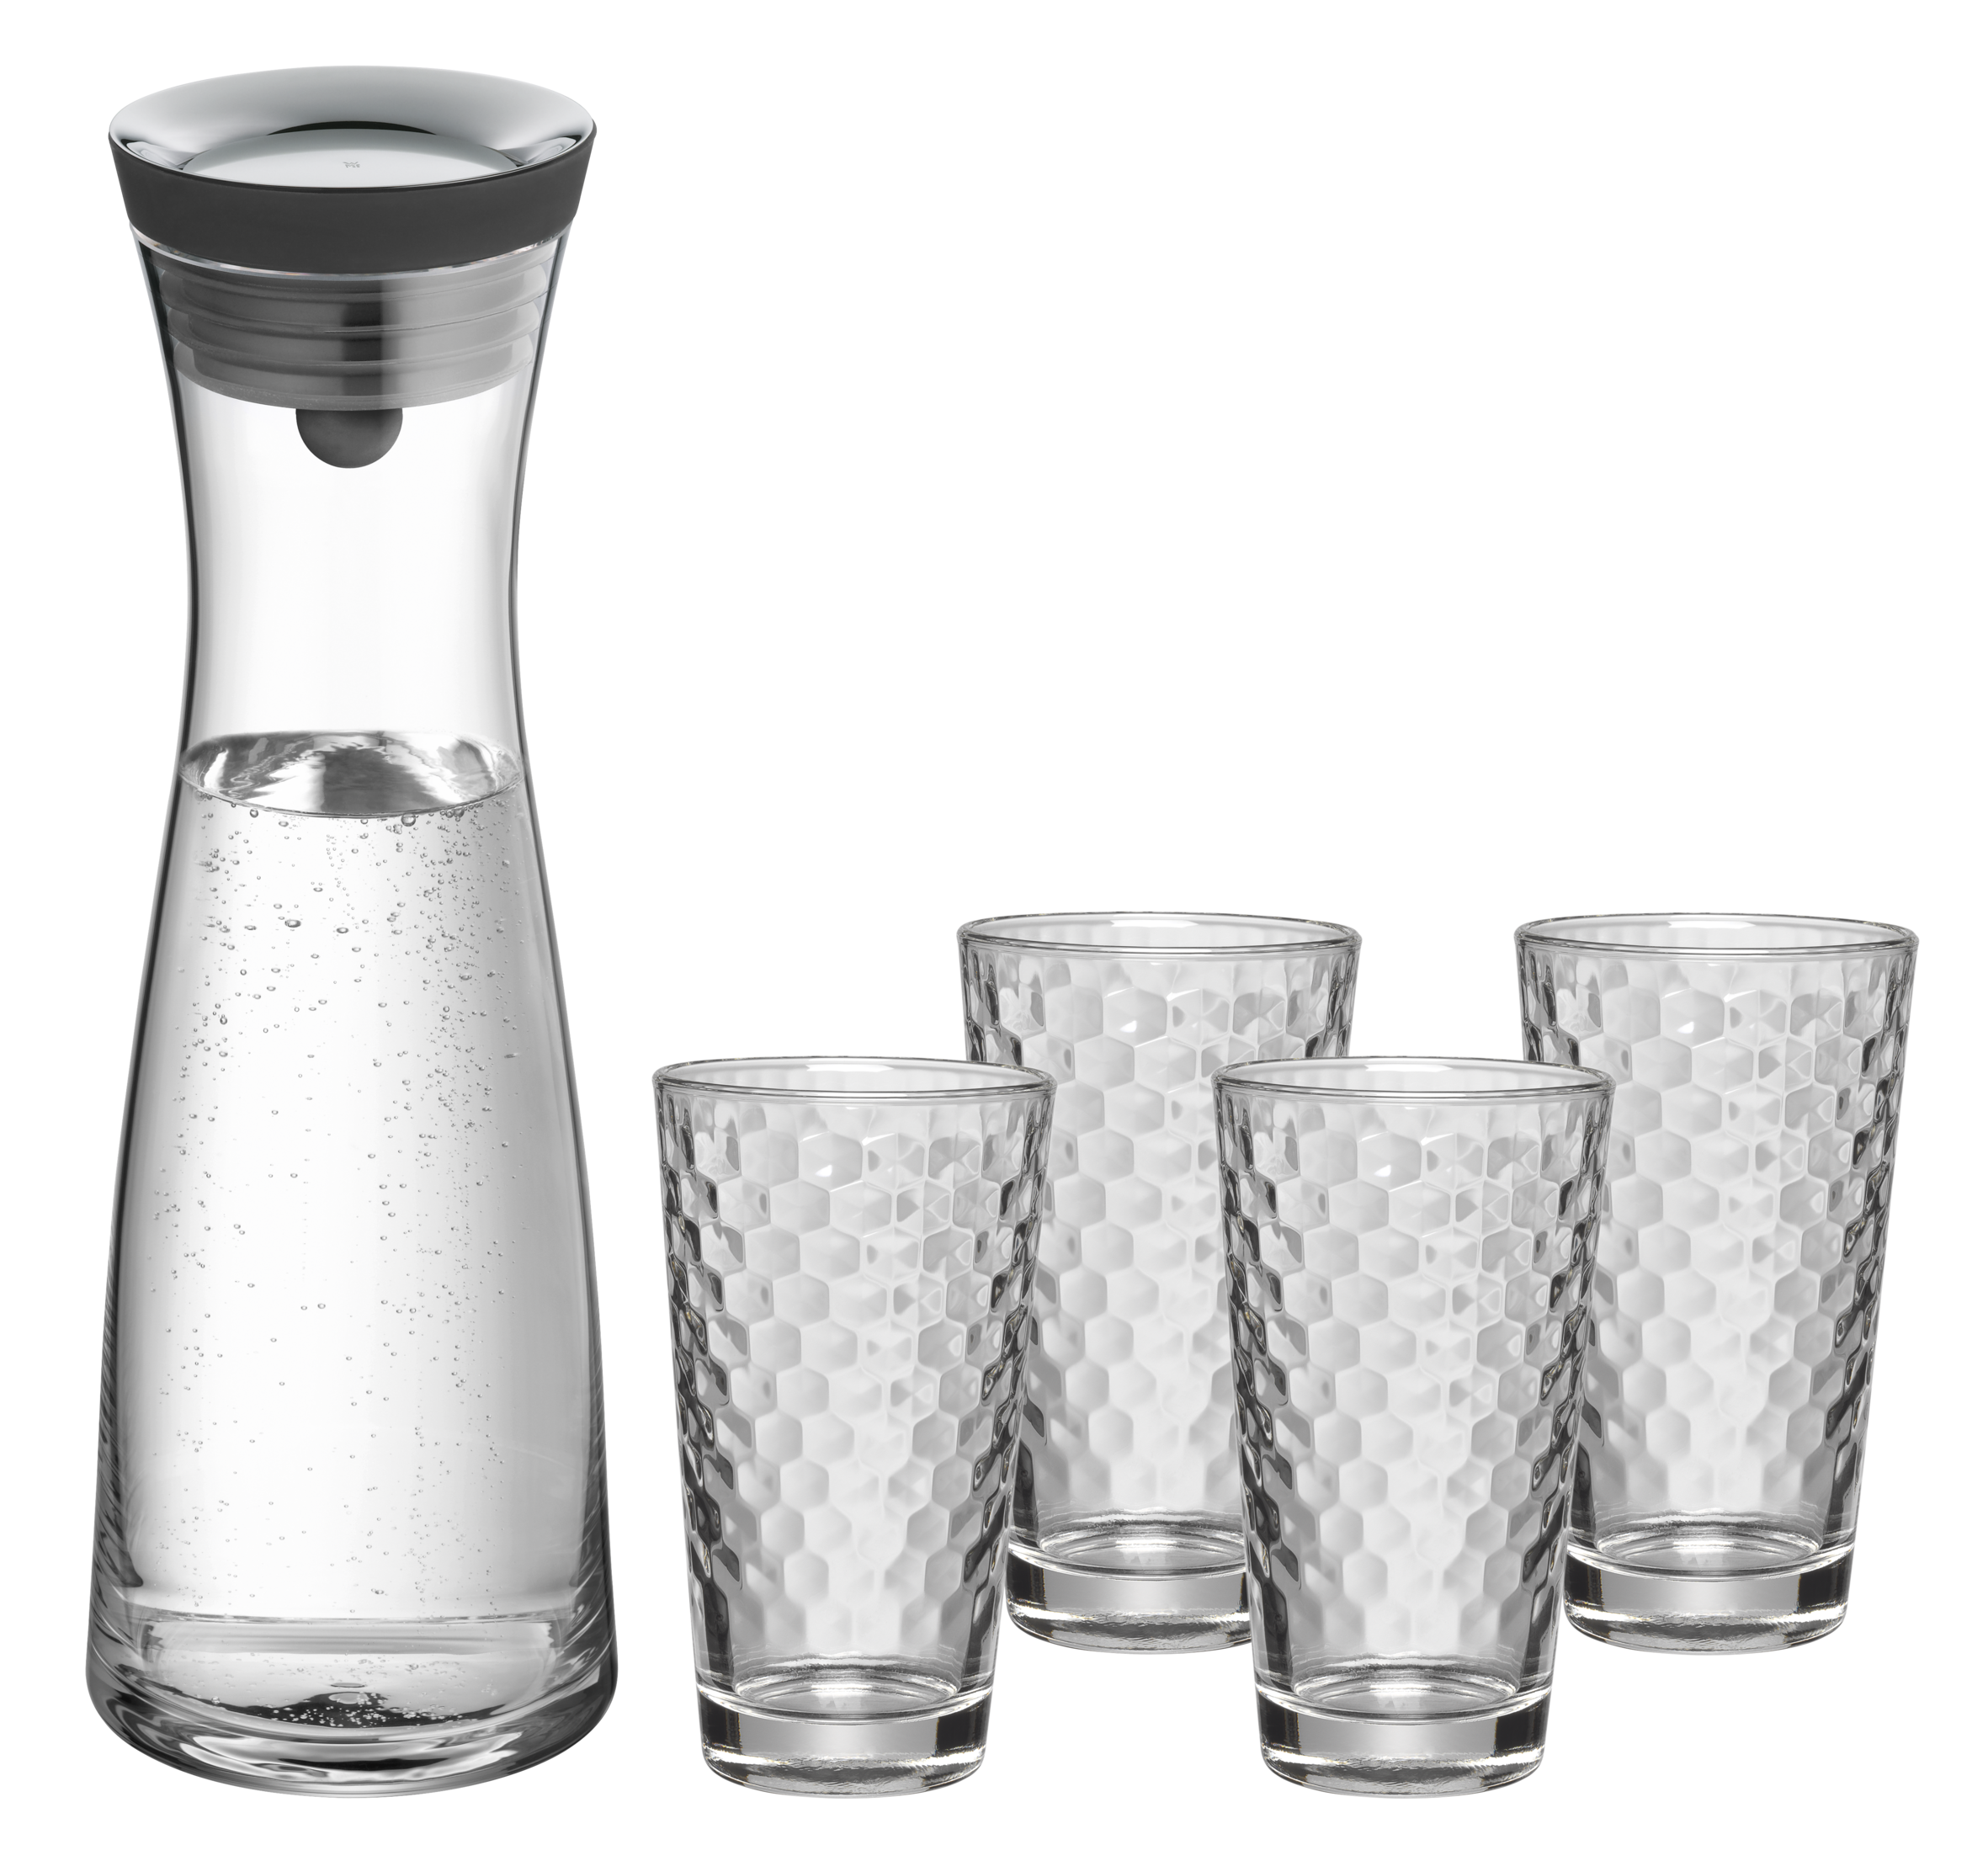 Графин для воды со стаканами 5 предметов минибар лофт 13 предметов бокалы 200 мл графин 500 мл стопка 60 мл